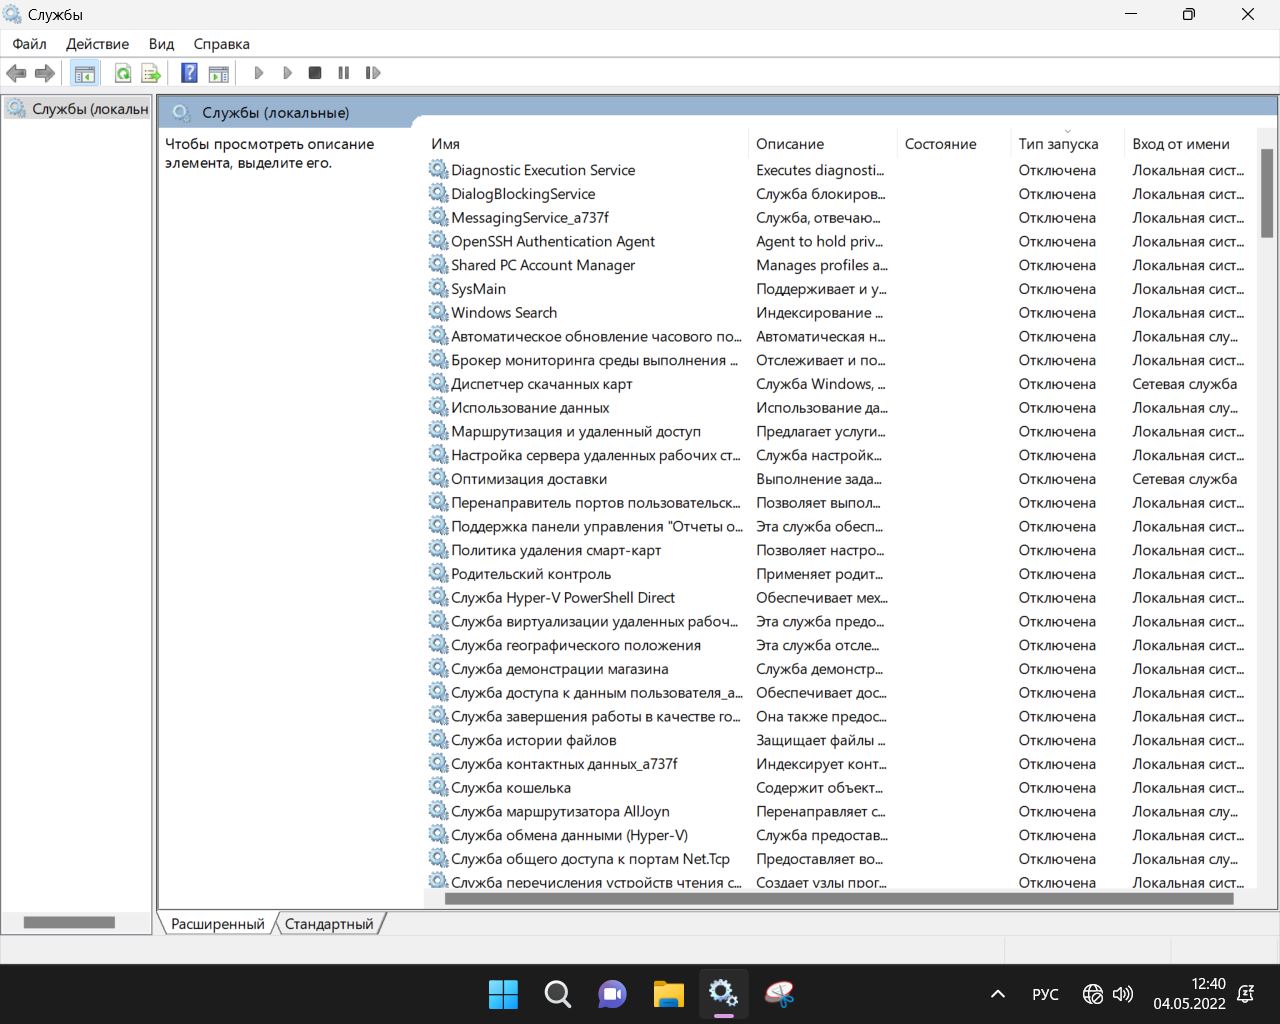 Windows 11 Enterprise Micro 22H2 build 22622.450 by Zosma (x64) (2022) [Rus]